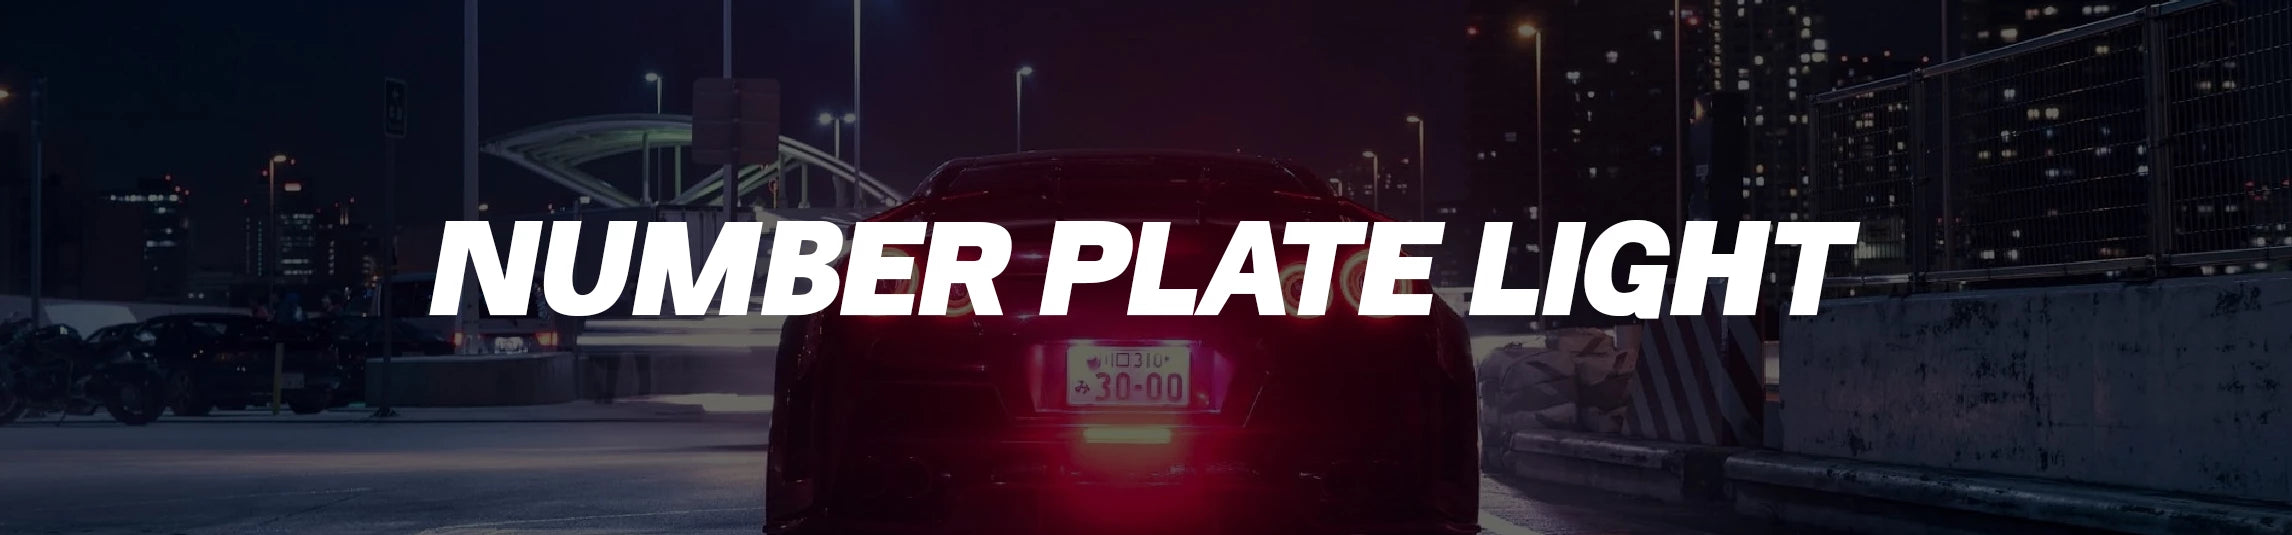 Number Plate Light